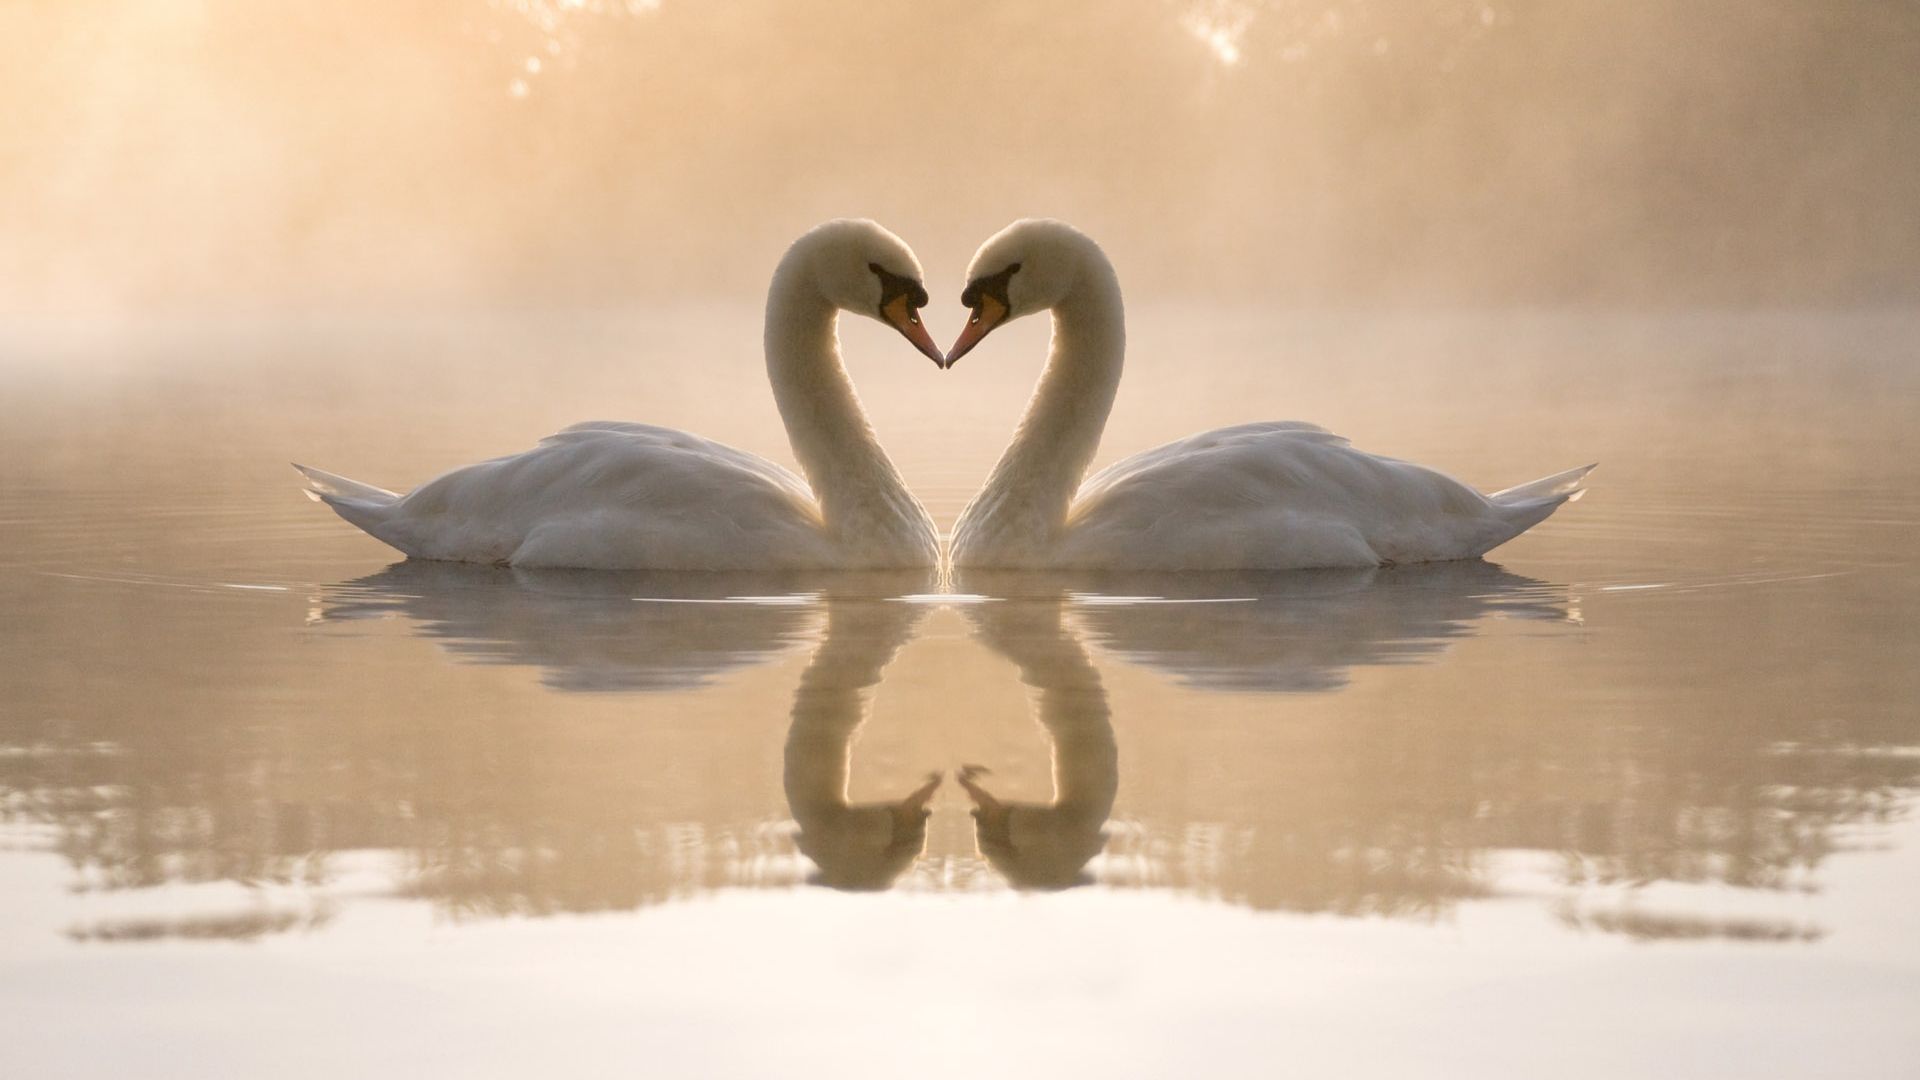 фото любовь, лебеди, love image, swan, couple, lake, 4k (horizontal)